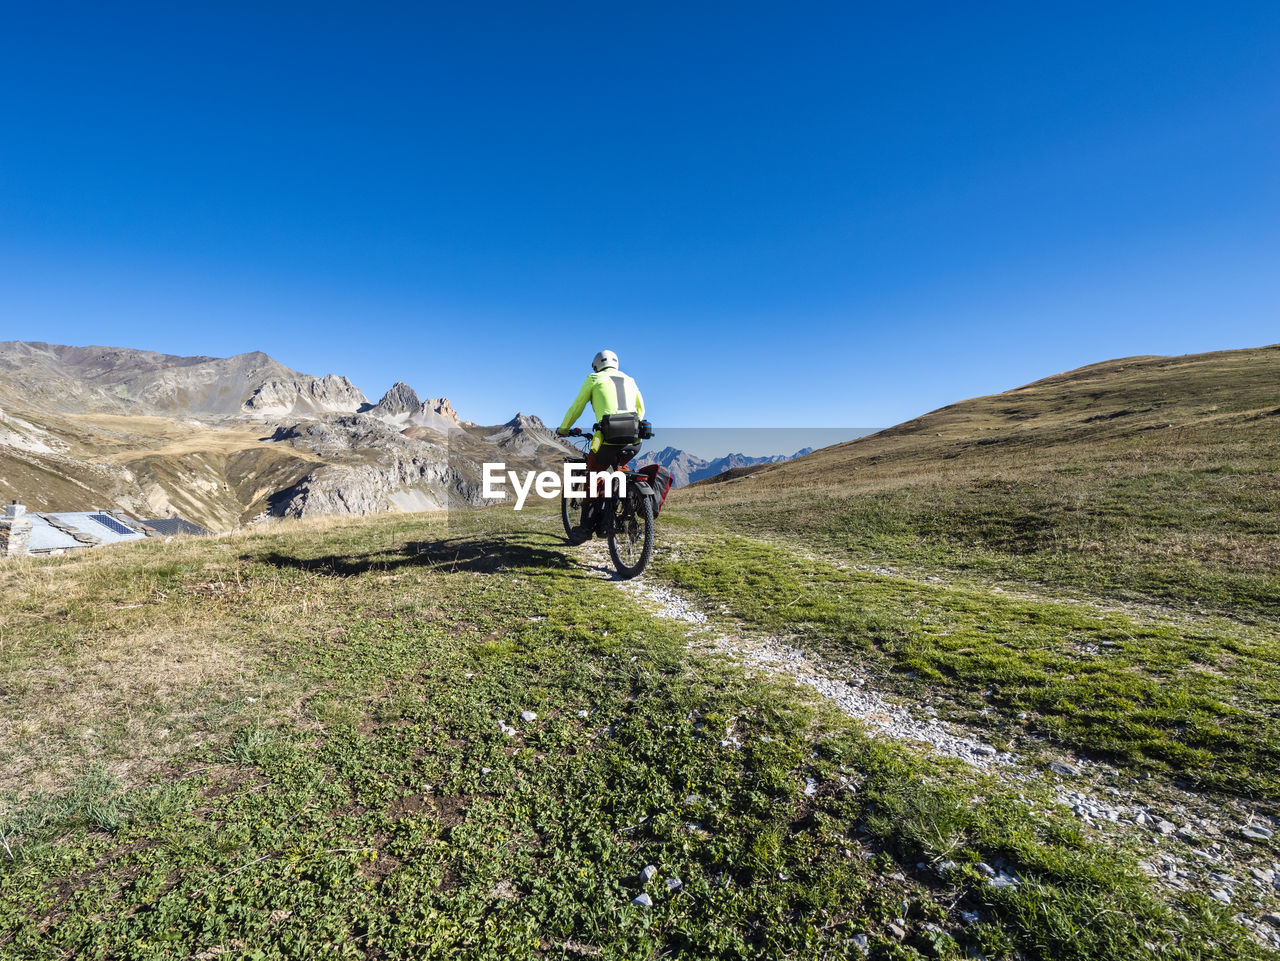 Man riding mountain bike on trail under blue sky, vanoise national park, france